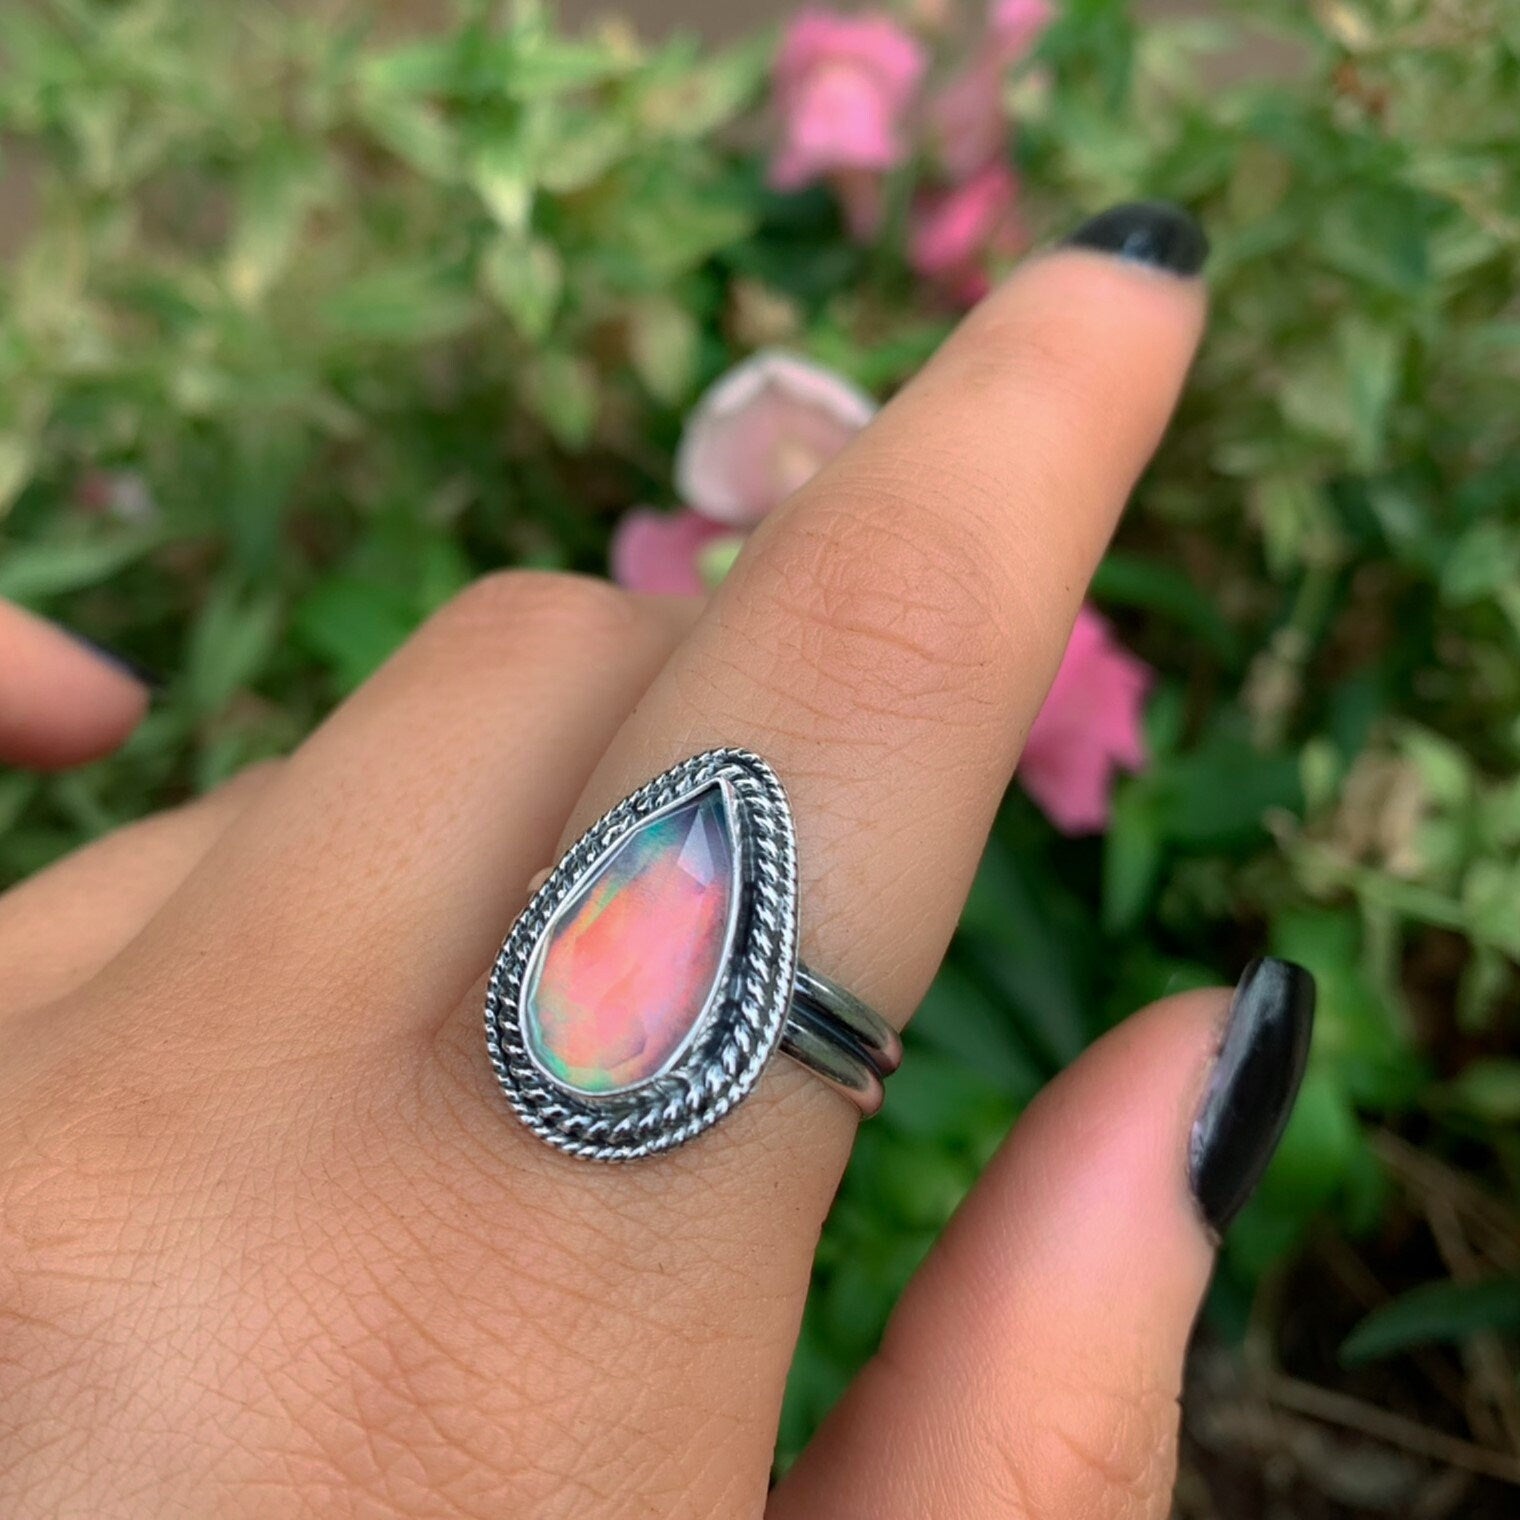 Rose Cut Clear Quartz & Aurora Opal Ring - Size 8 1/2 to 8 3/4 - Sterling Silver - Pastel Rainbow Opal Jewellery - Teardrop Rainbow Crystal